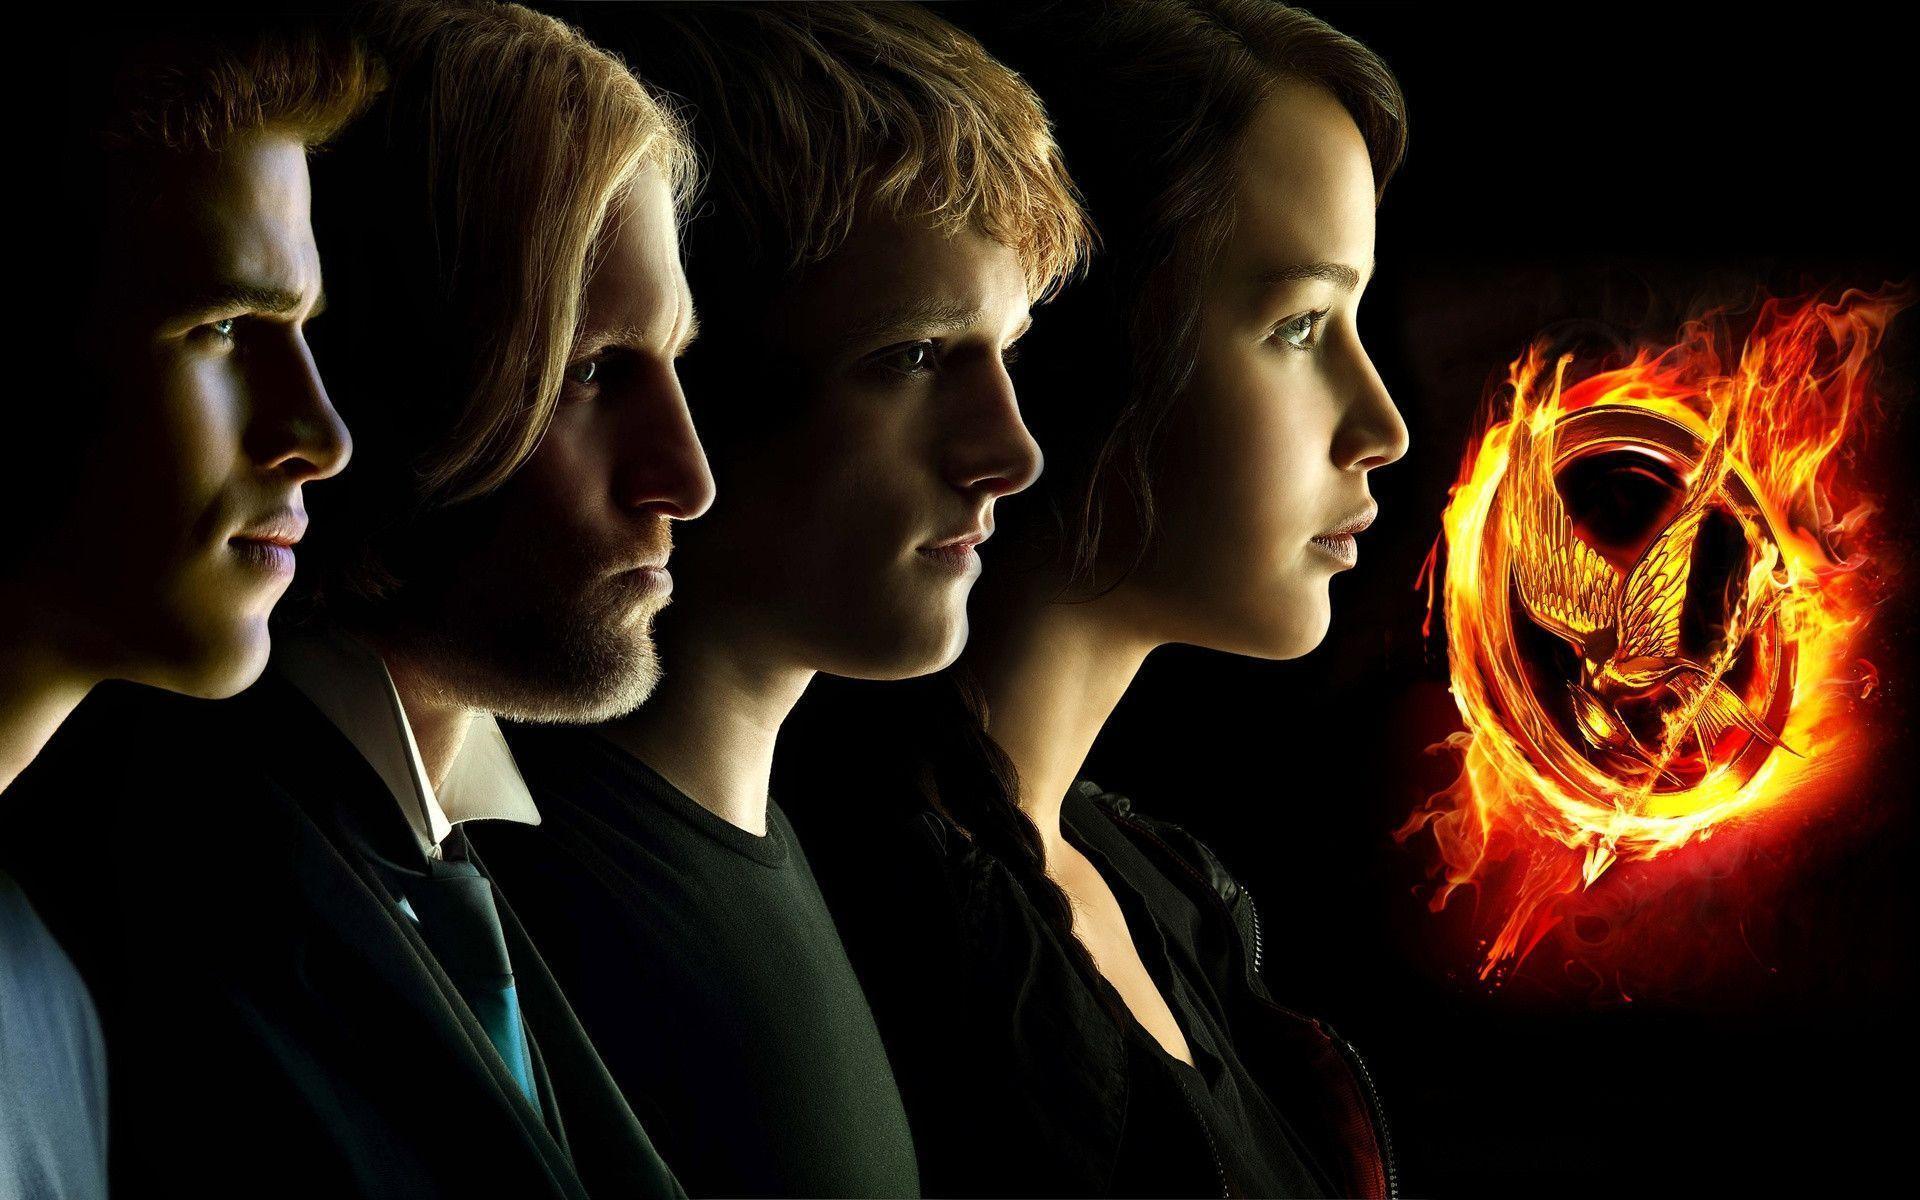 image For > Hunger Games Background